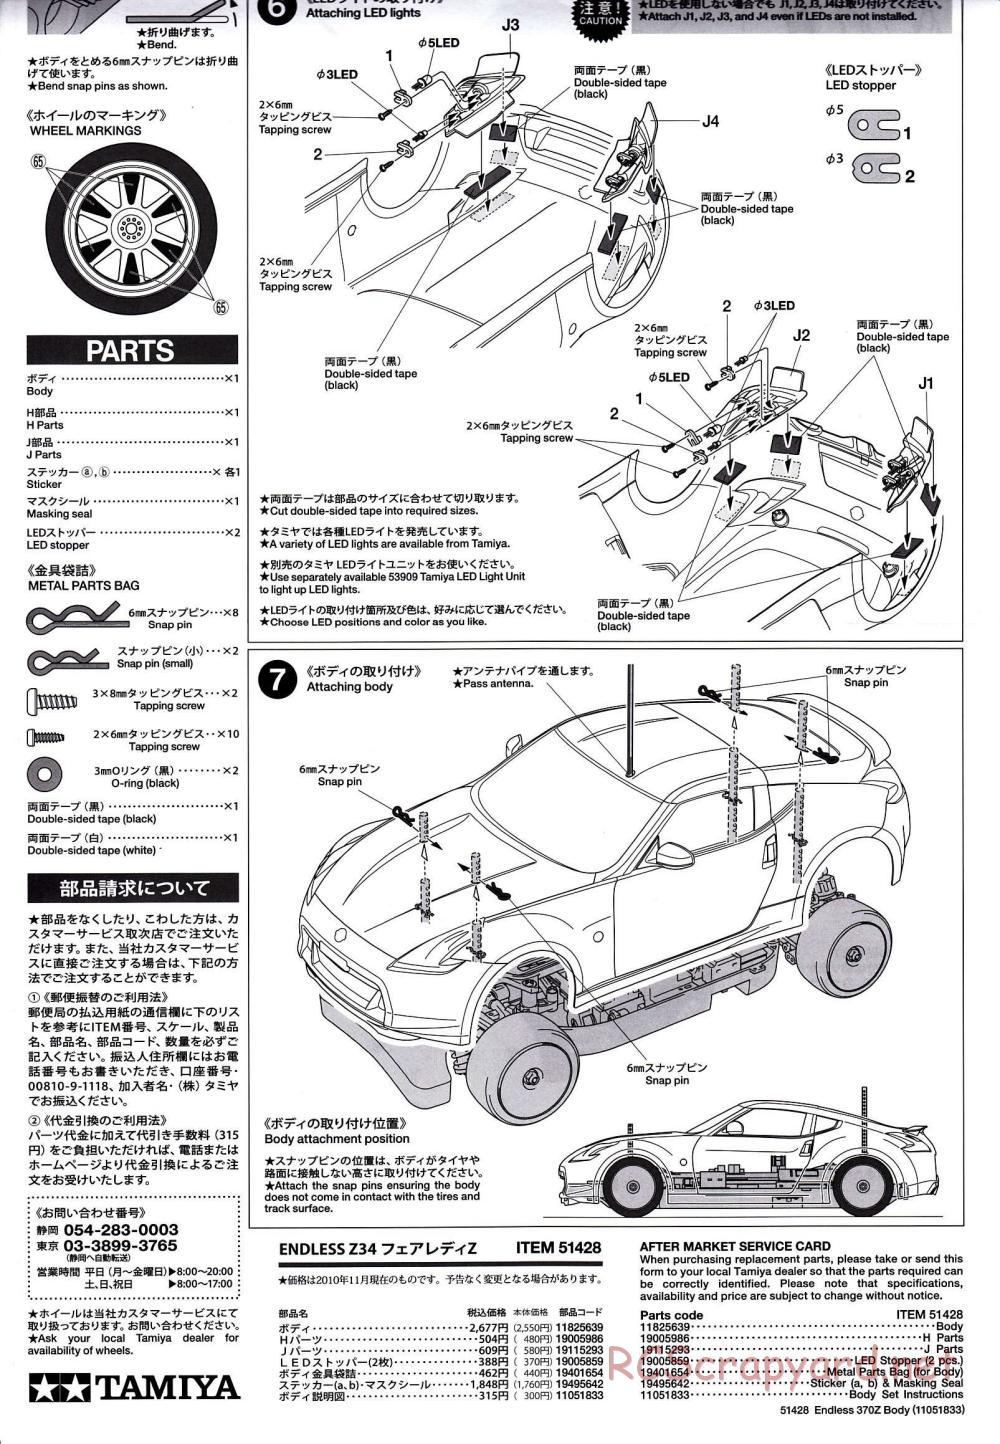 Tamiya - Endless Nissan 370Z - Drift Spec - TT-01ED Chassis - Body Manual - Page 4